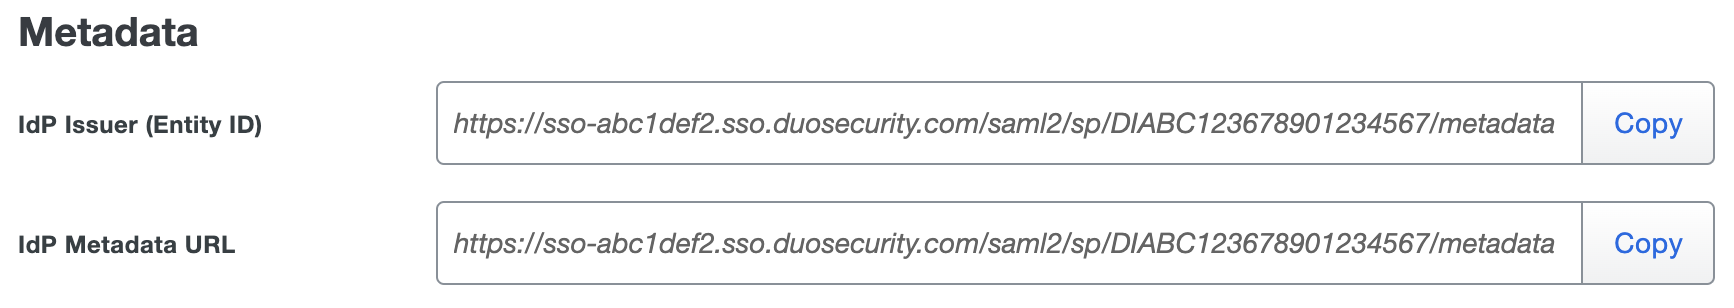 Duo Bonusly Metadata URLs